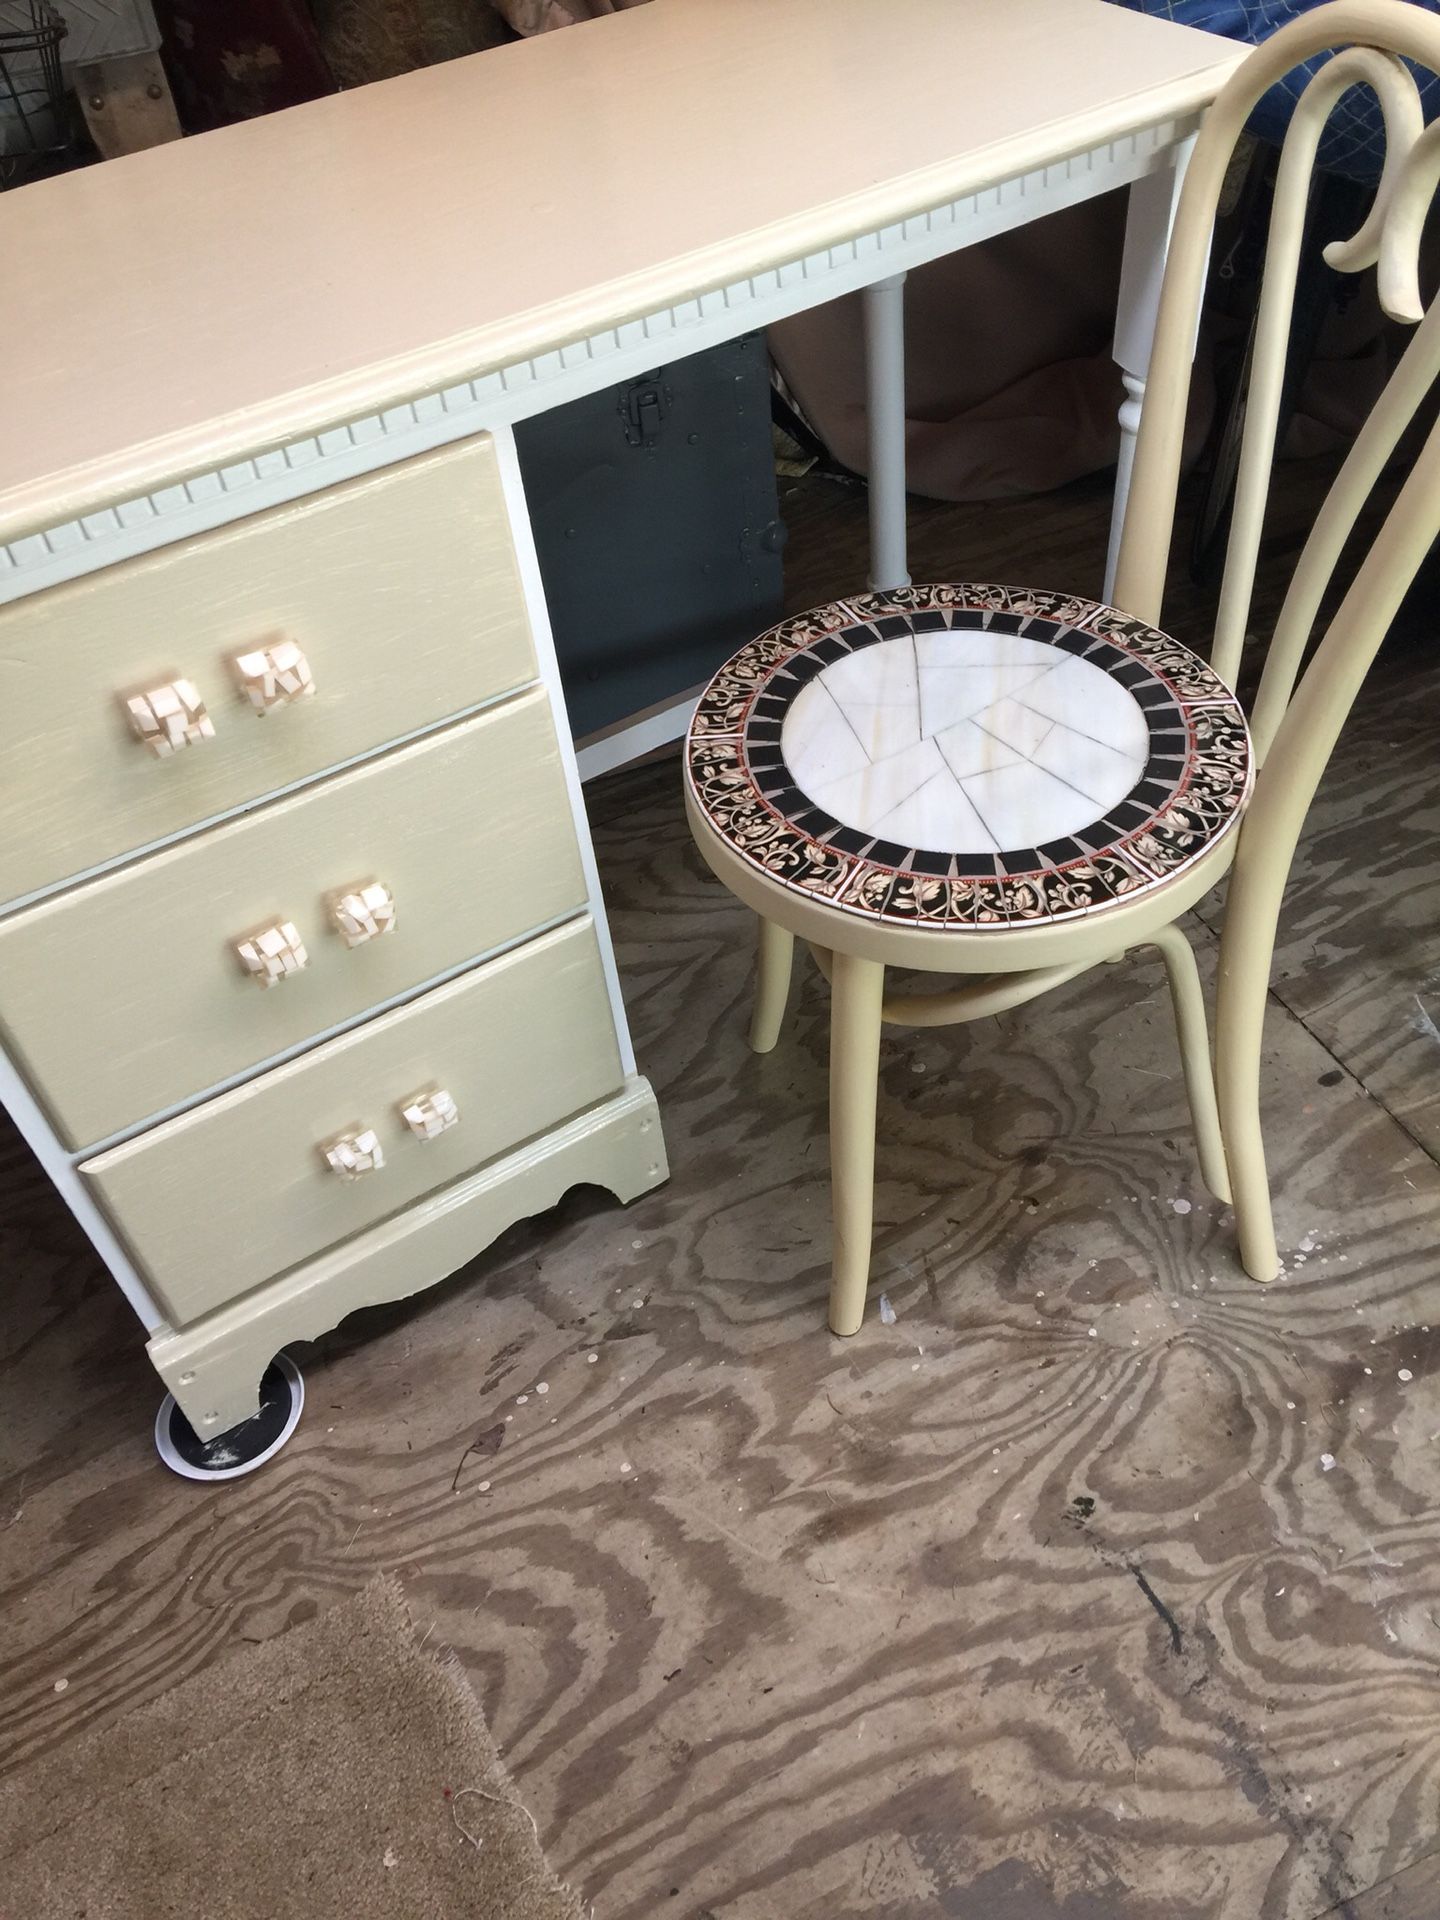 Refinished Desk and elegant Tiled Chair